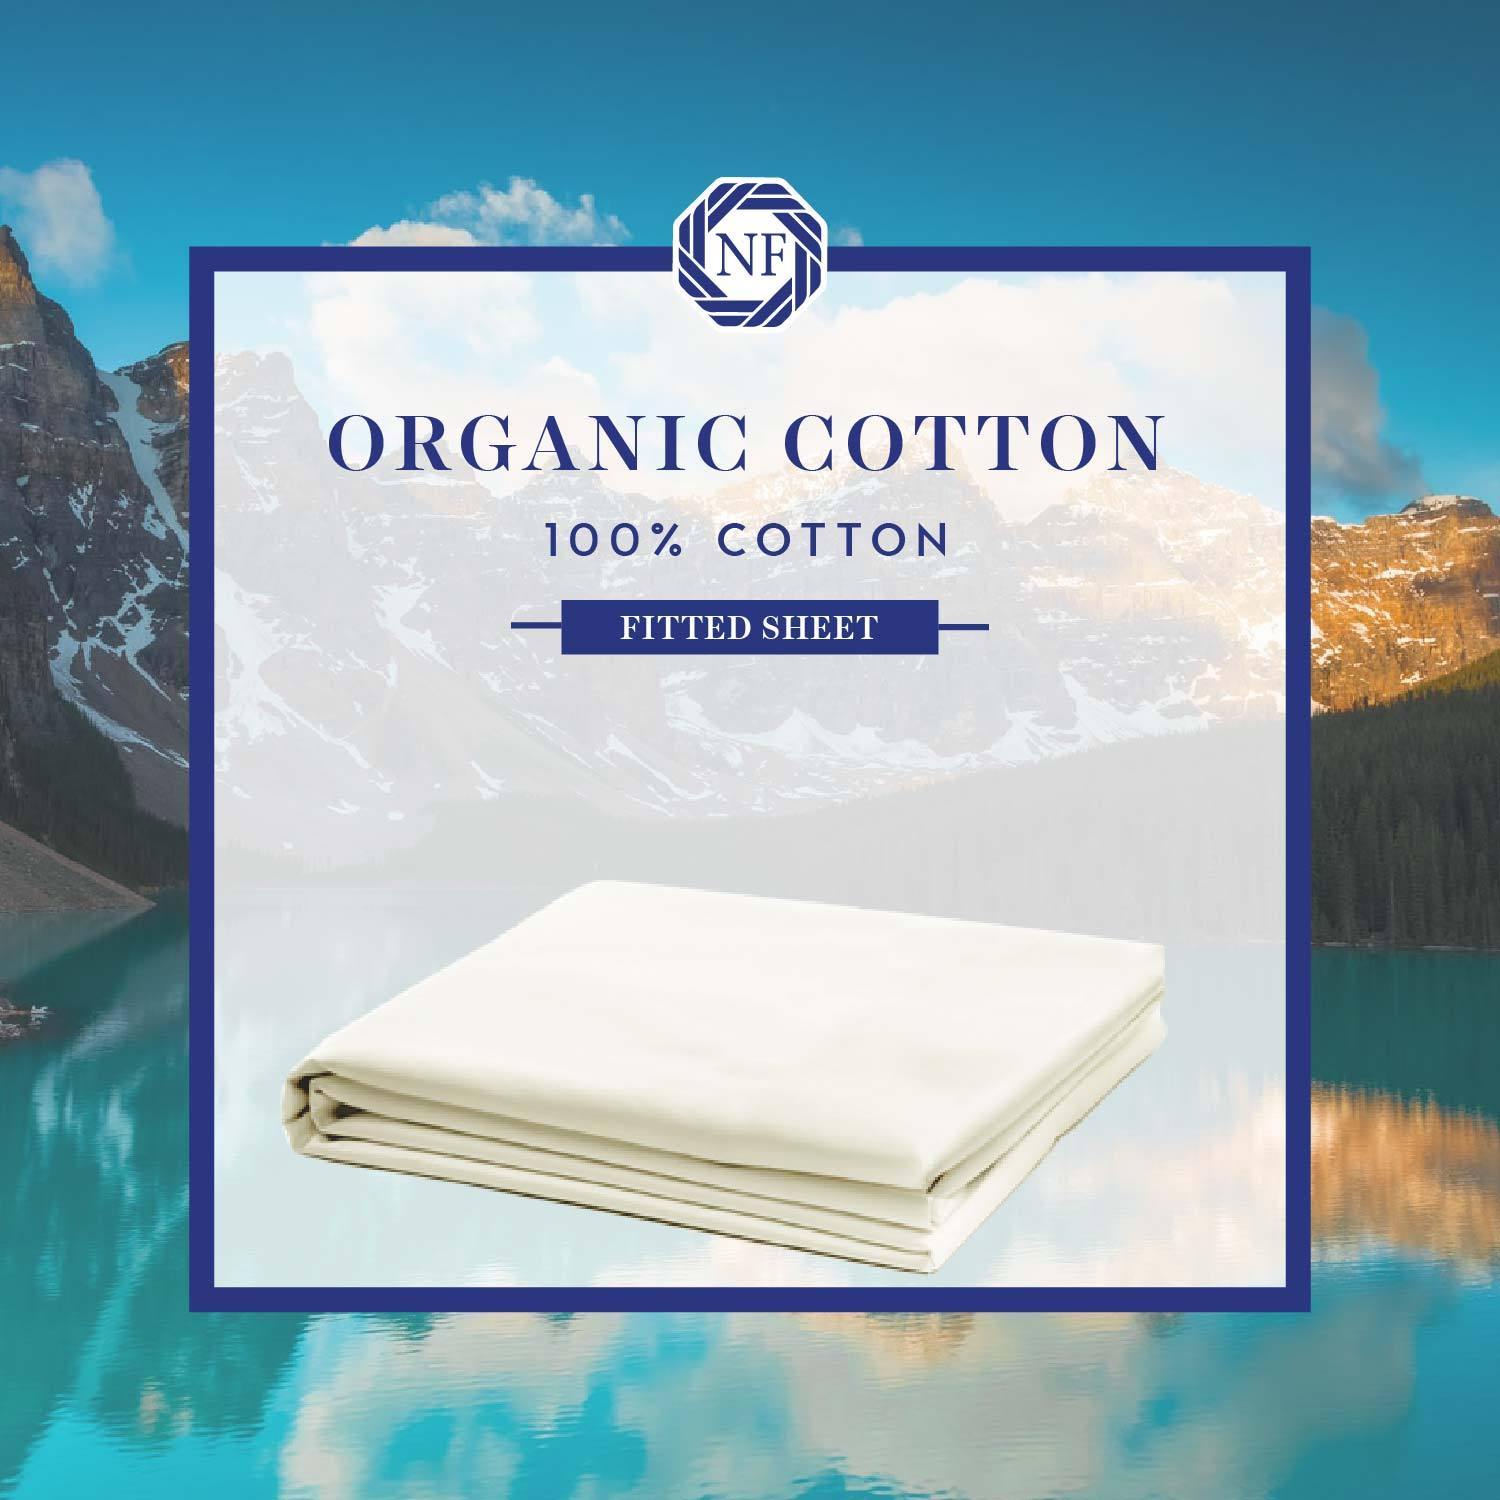 Organic Cotton - 100% Cotton Linen - Northern Feather Canada eStore